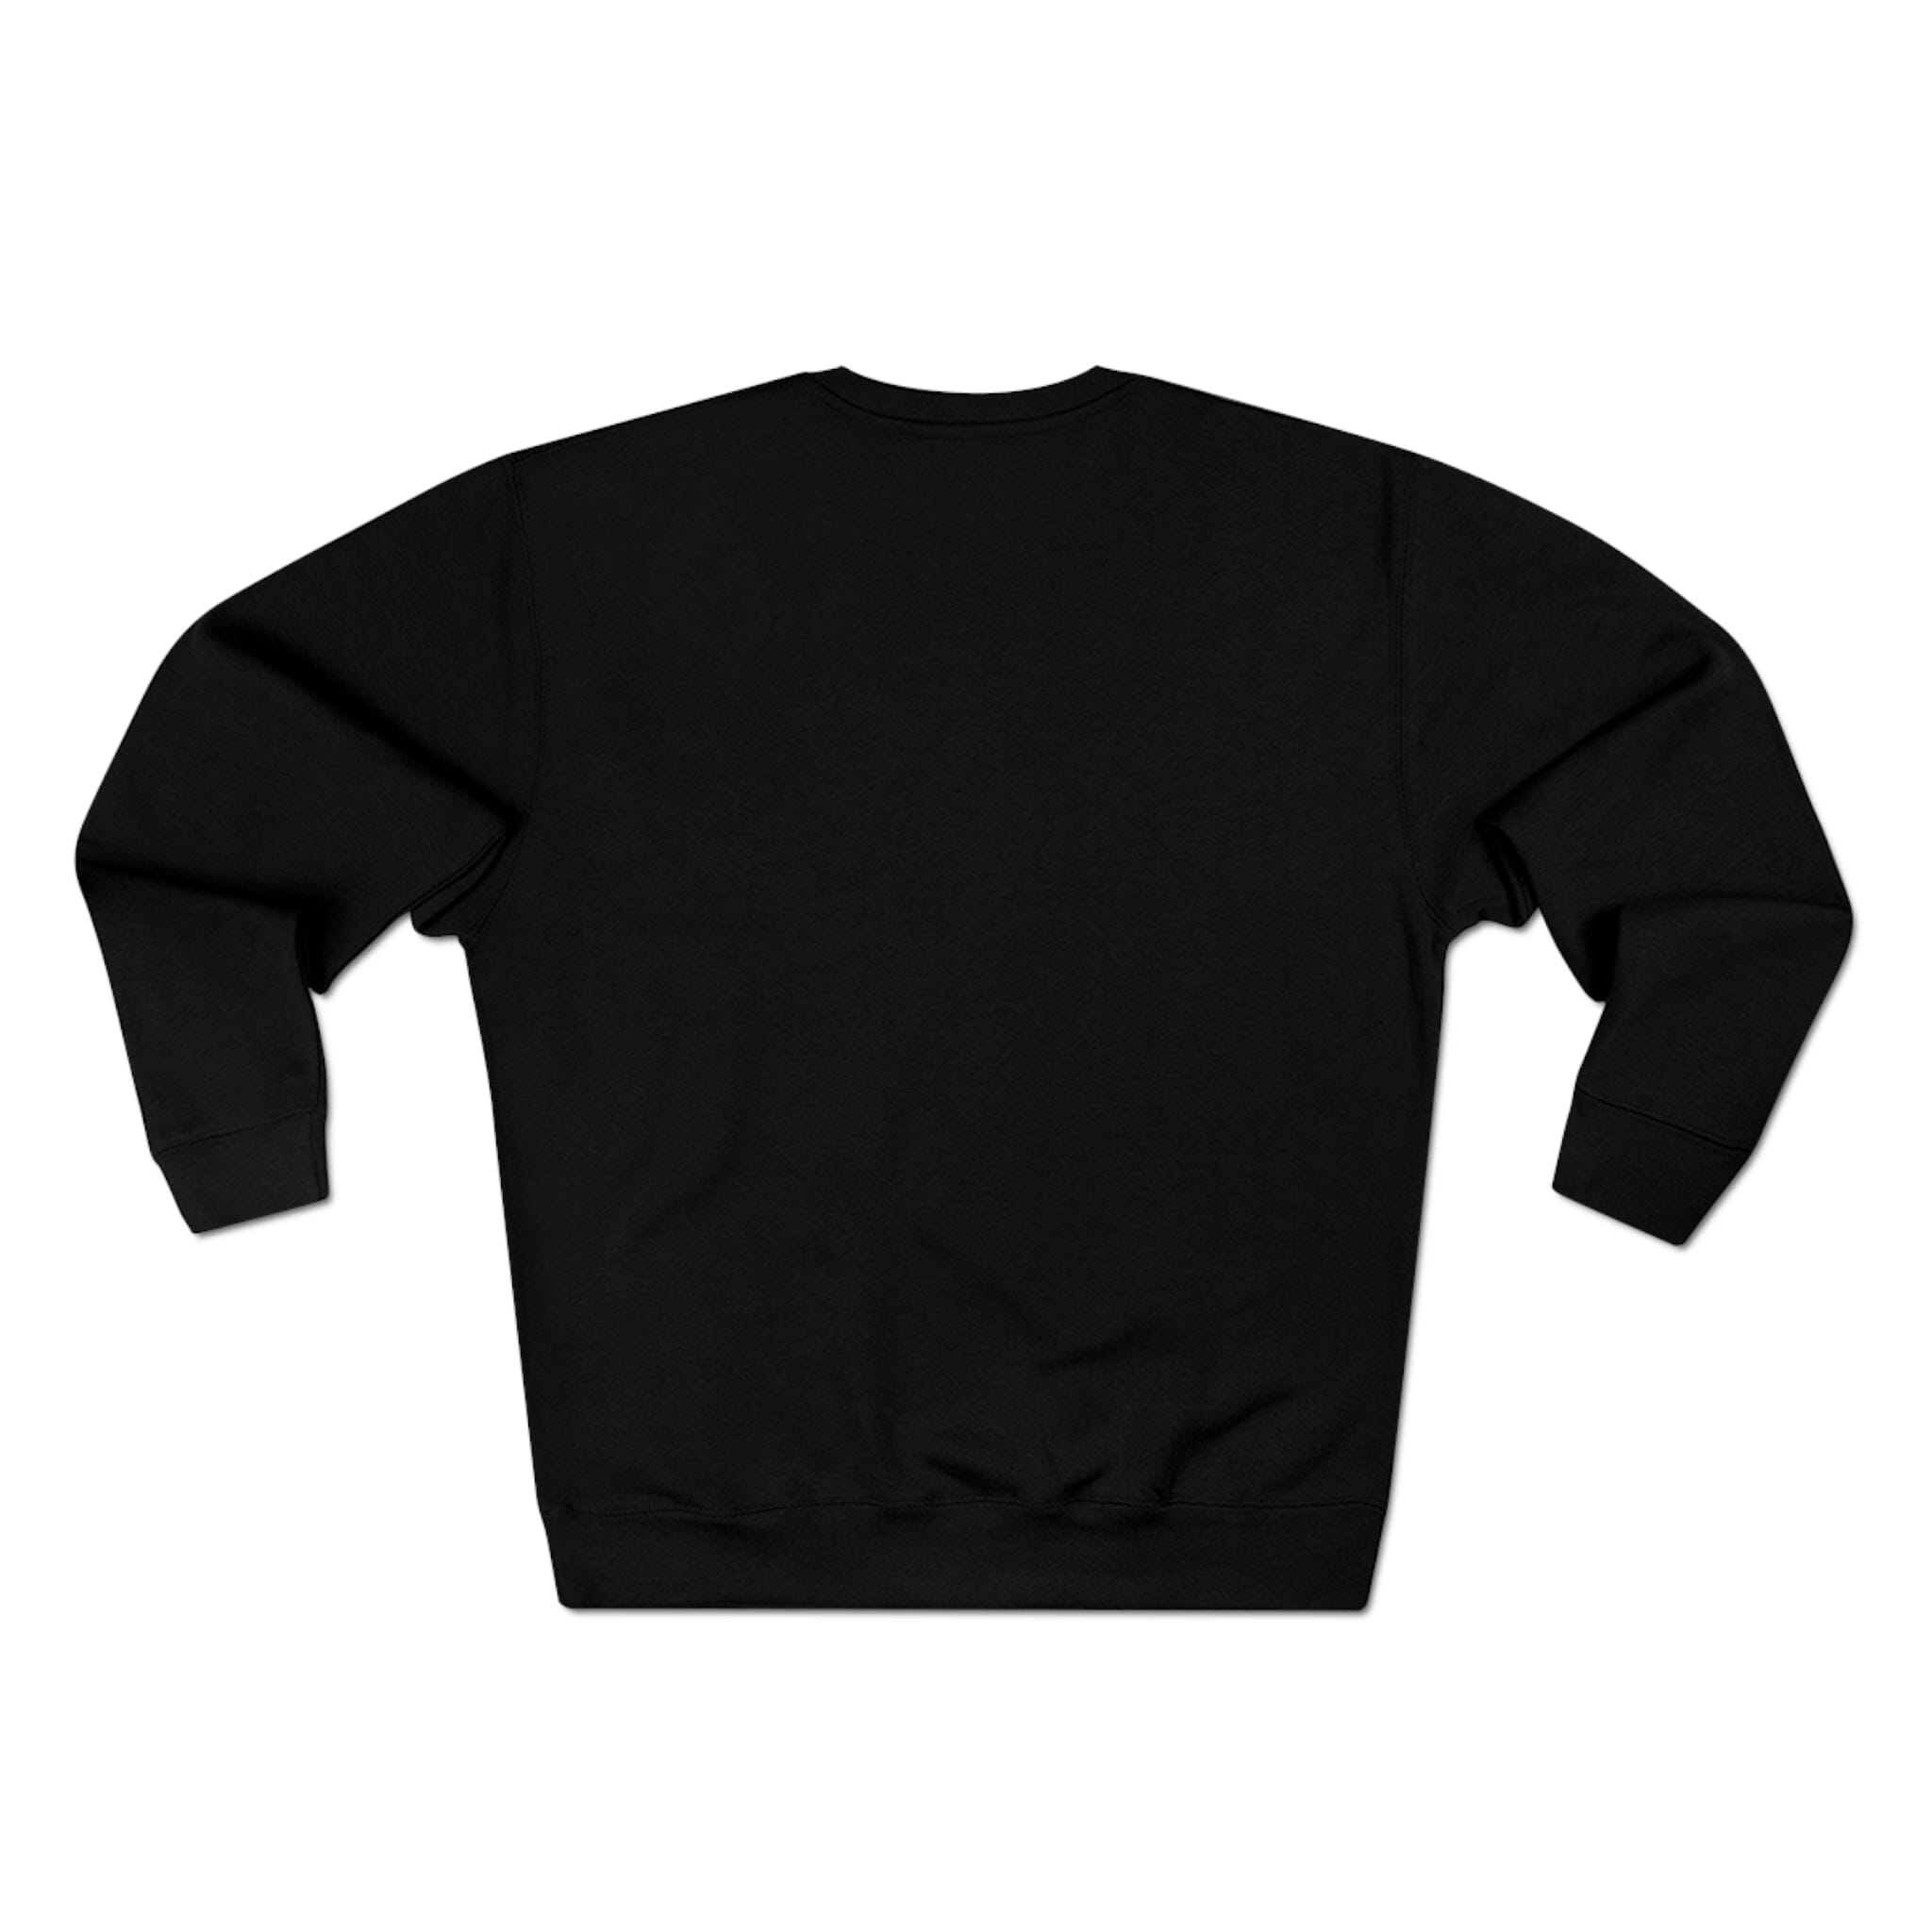 Black 365 Premium Crewneck Sweatshirt